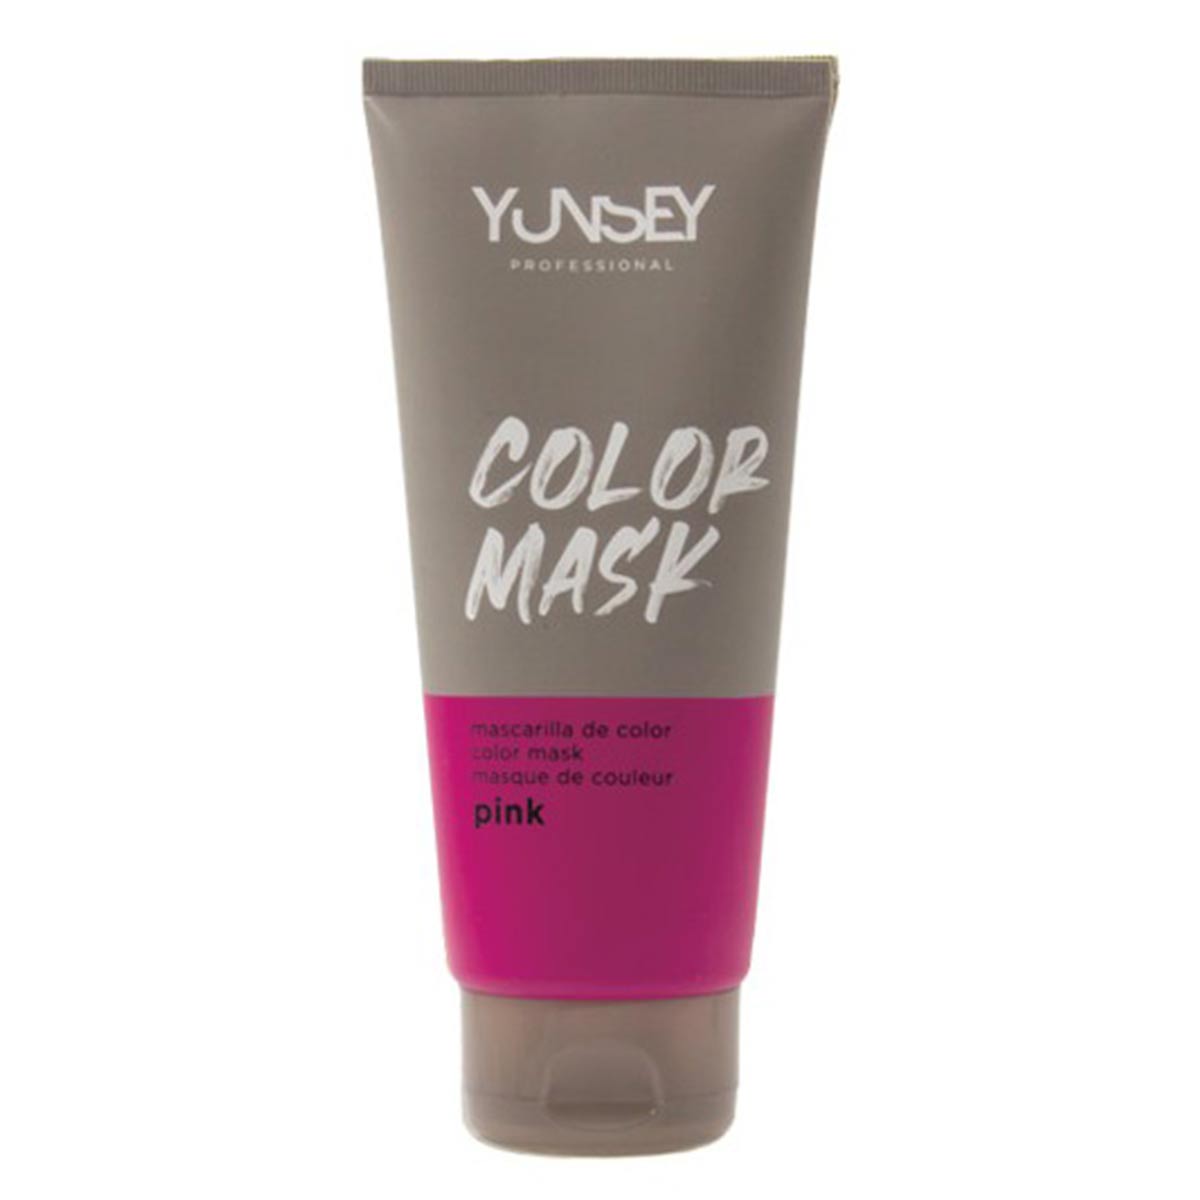 ماسک مو رنگساژ صورتی یانسی YUNSEY مدل COLOR MASK حجم 200 میل